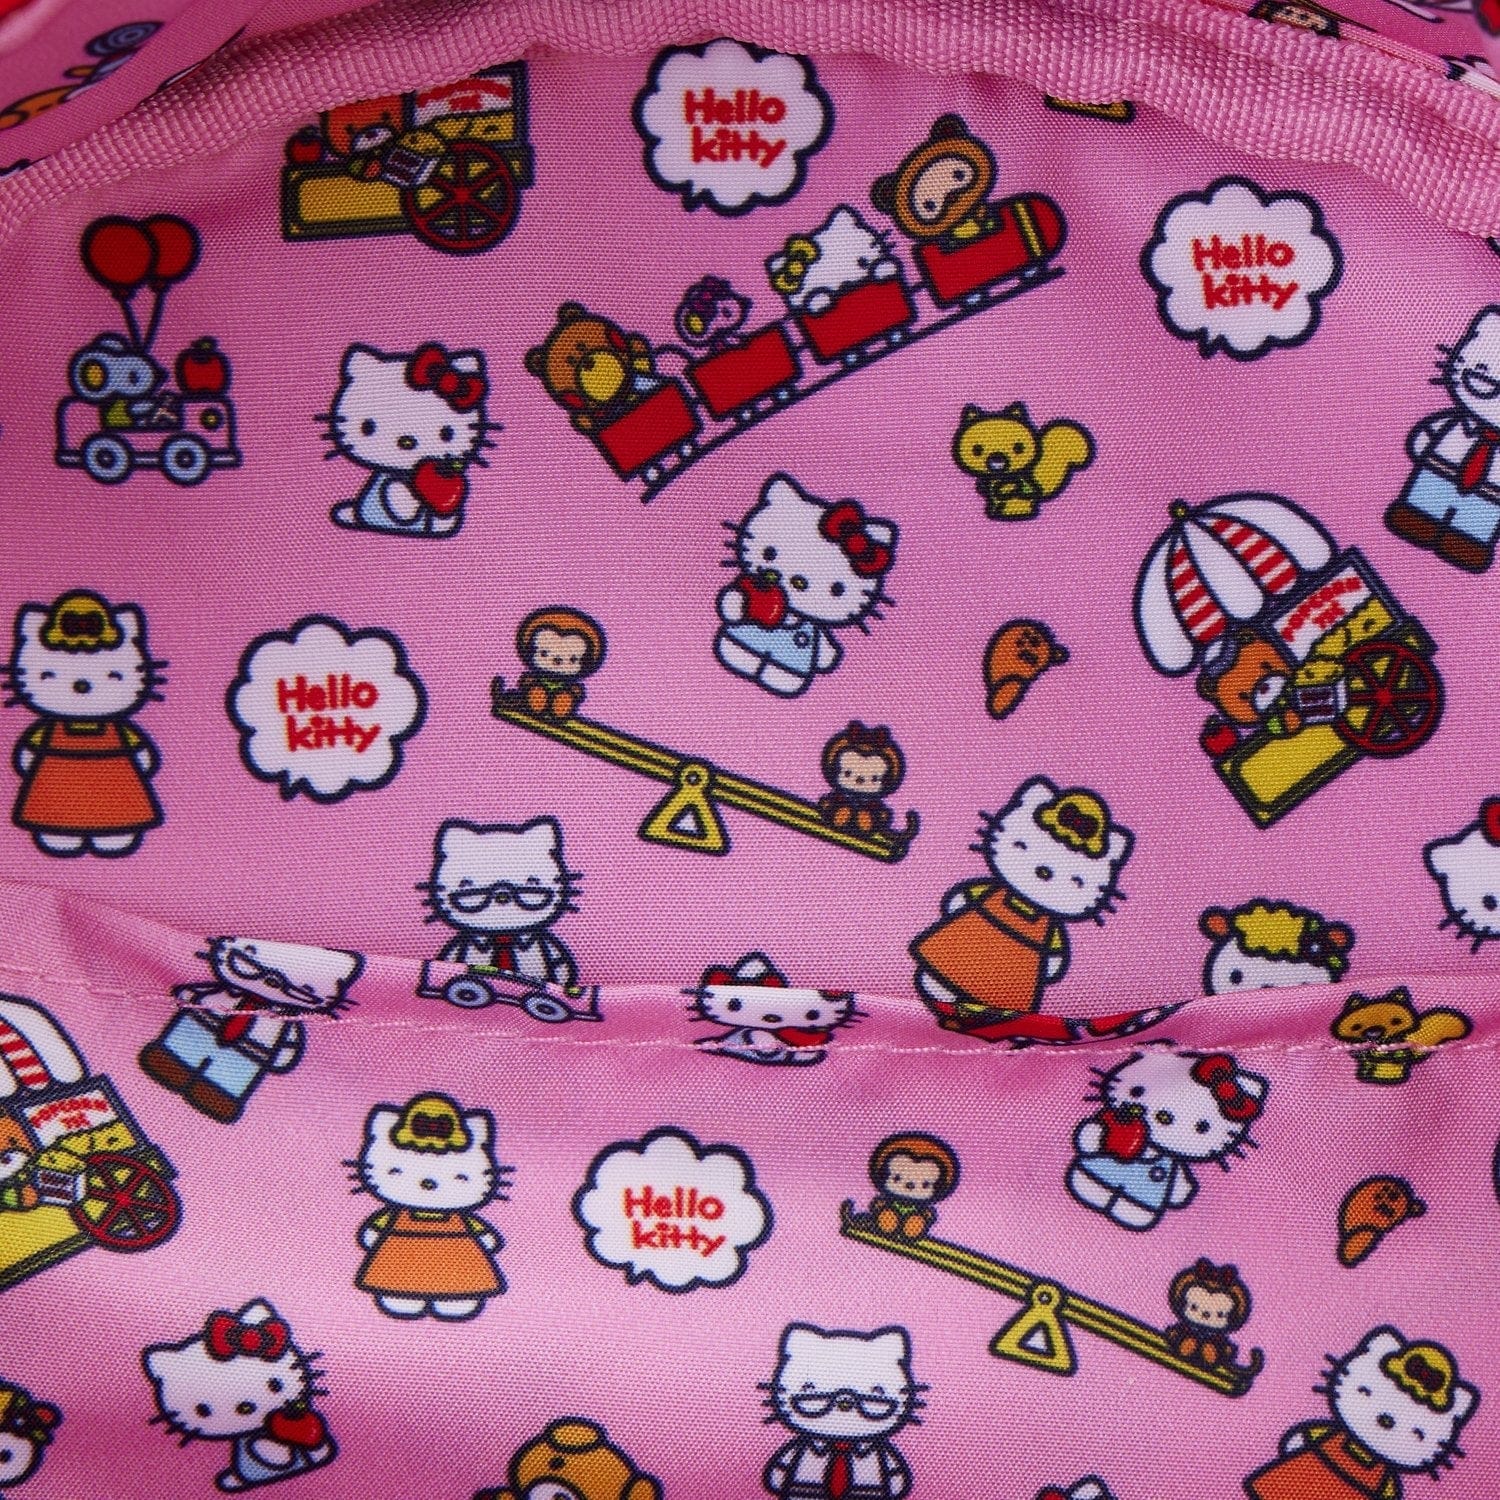 Loungefly X Sanrio Hello Kitty Large Purple Purse- Handbag Very